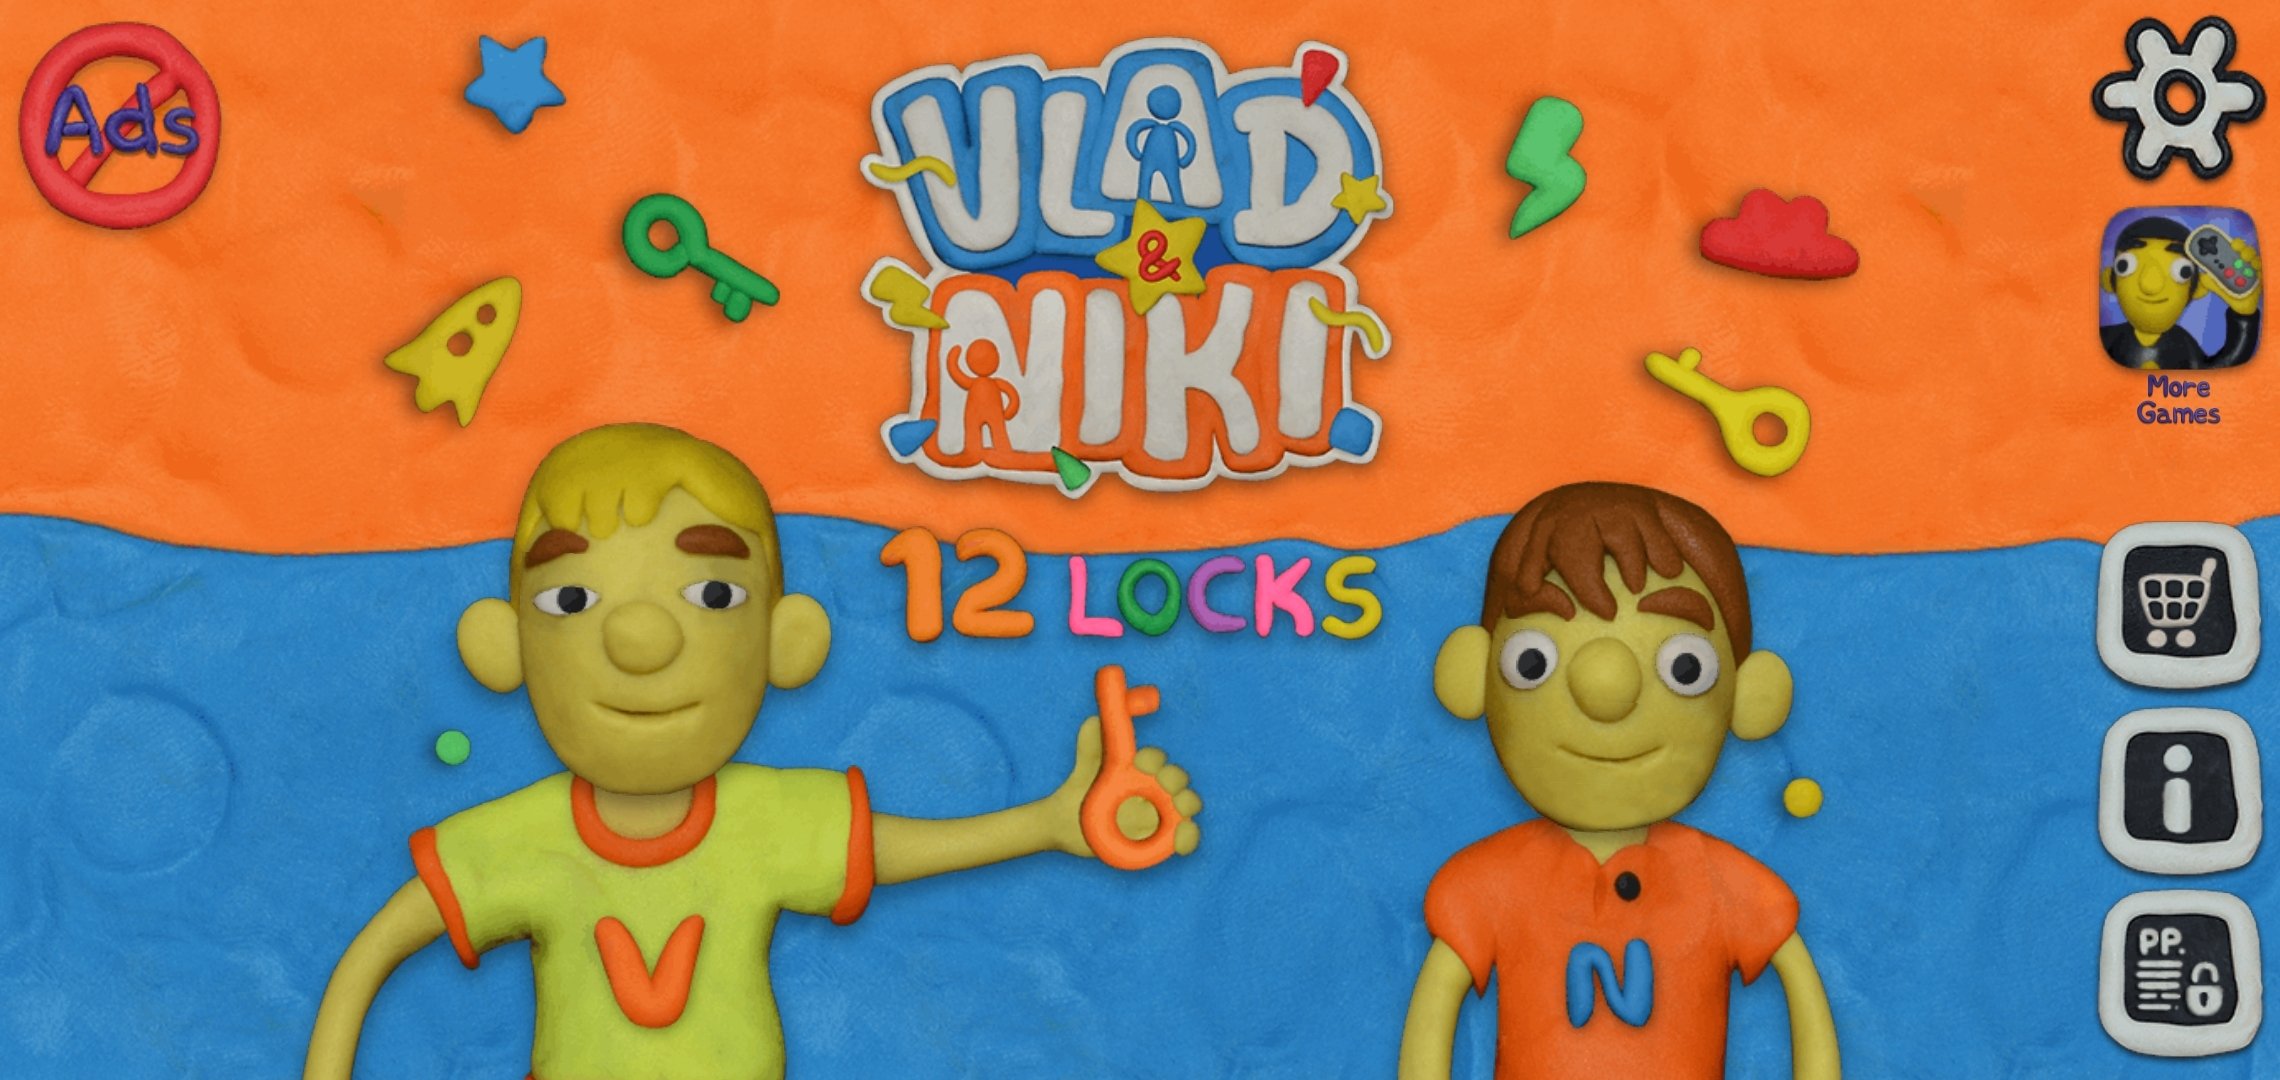 Vlad & Niki 12 Locks 1.10.3 - Download for Android APK Free